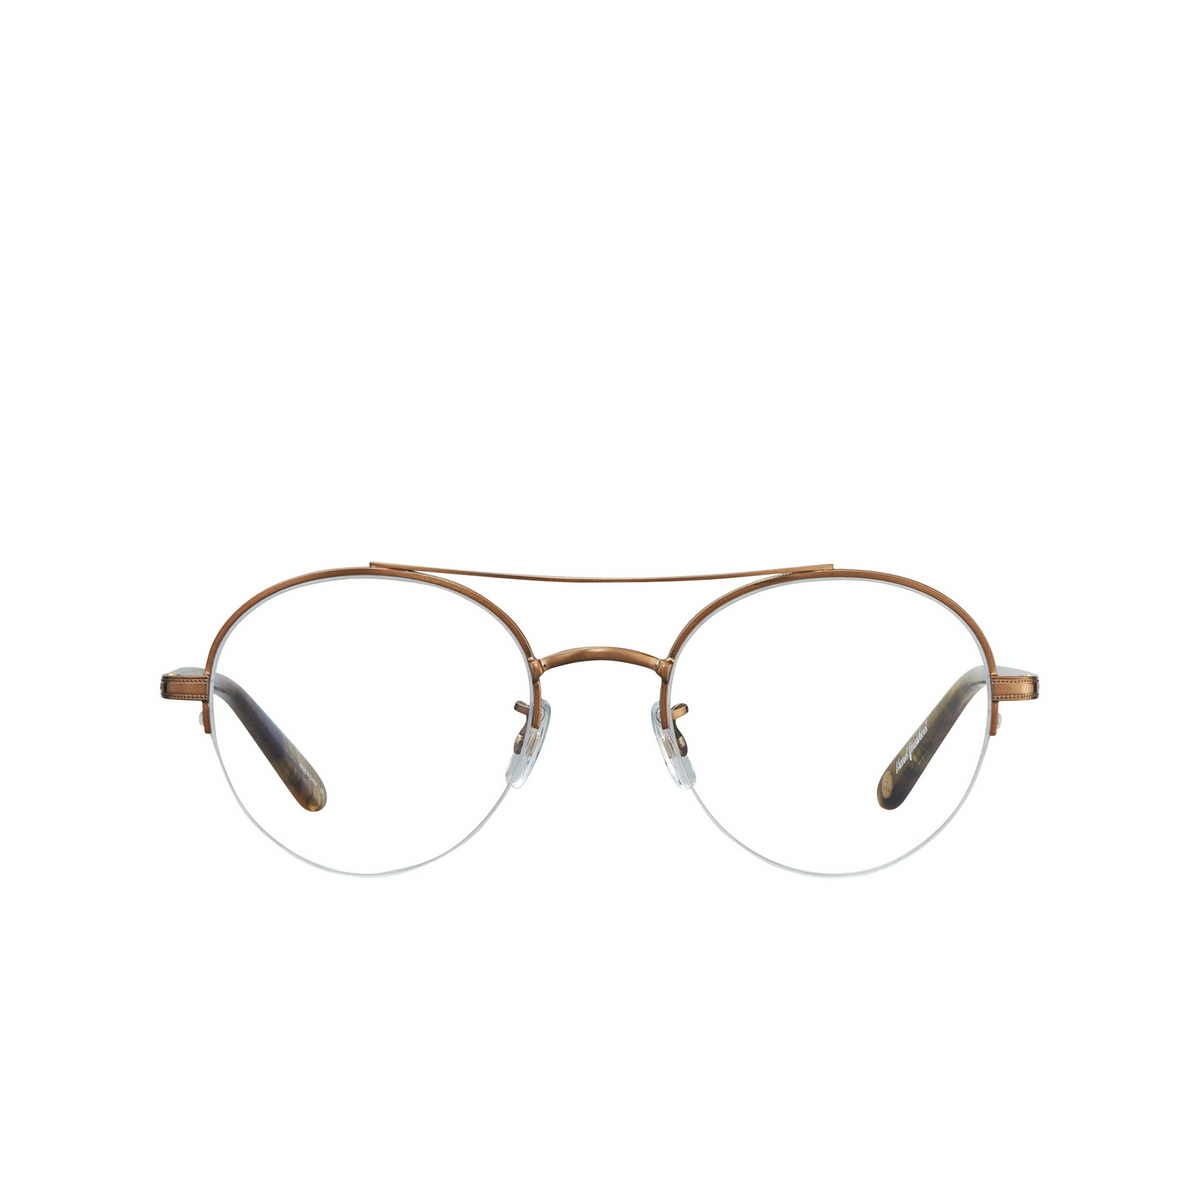 Garrett Leight MANCHESTER Eyeglasses BG-FET Brushed Gold-Feather Tortoise - front view